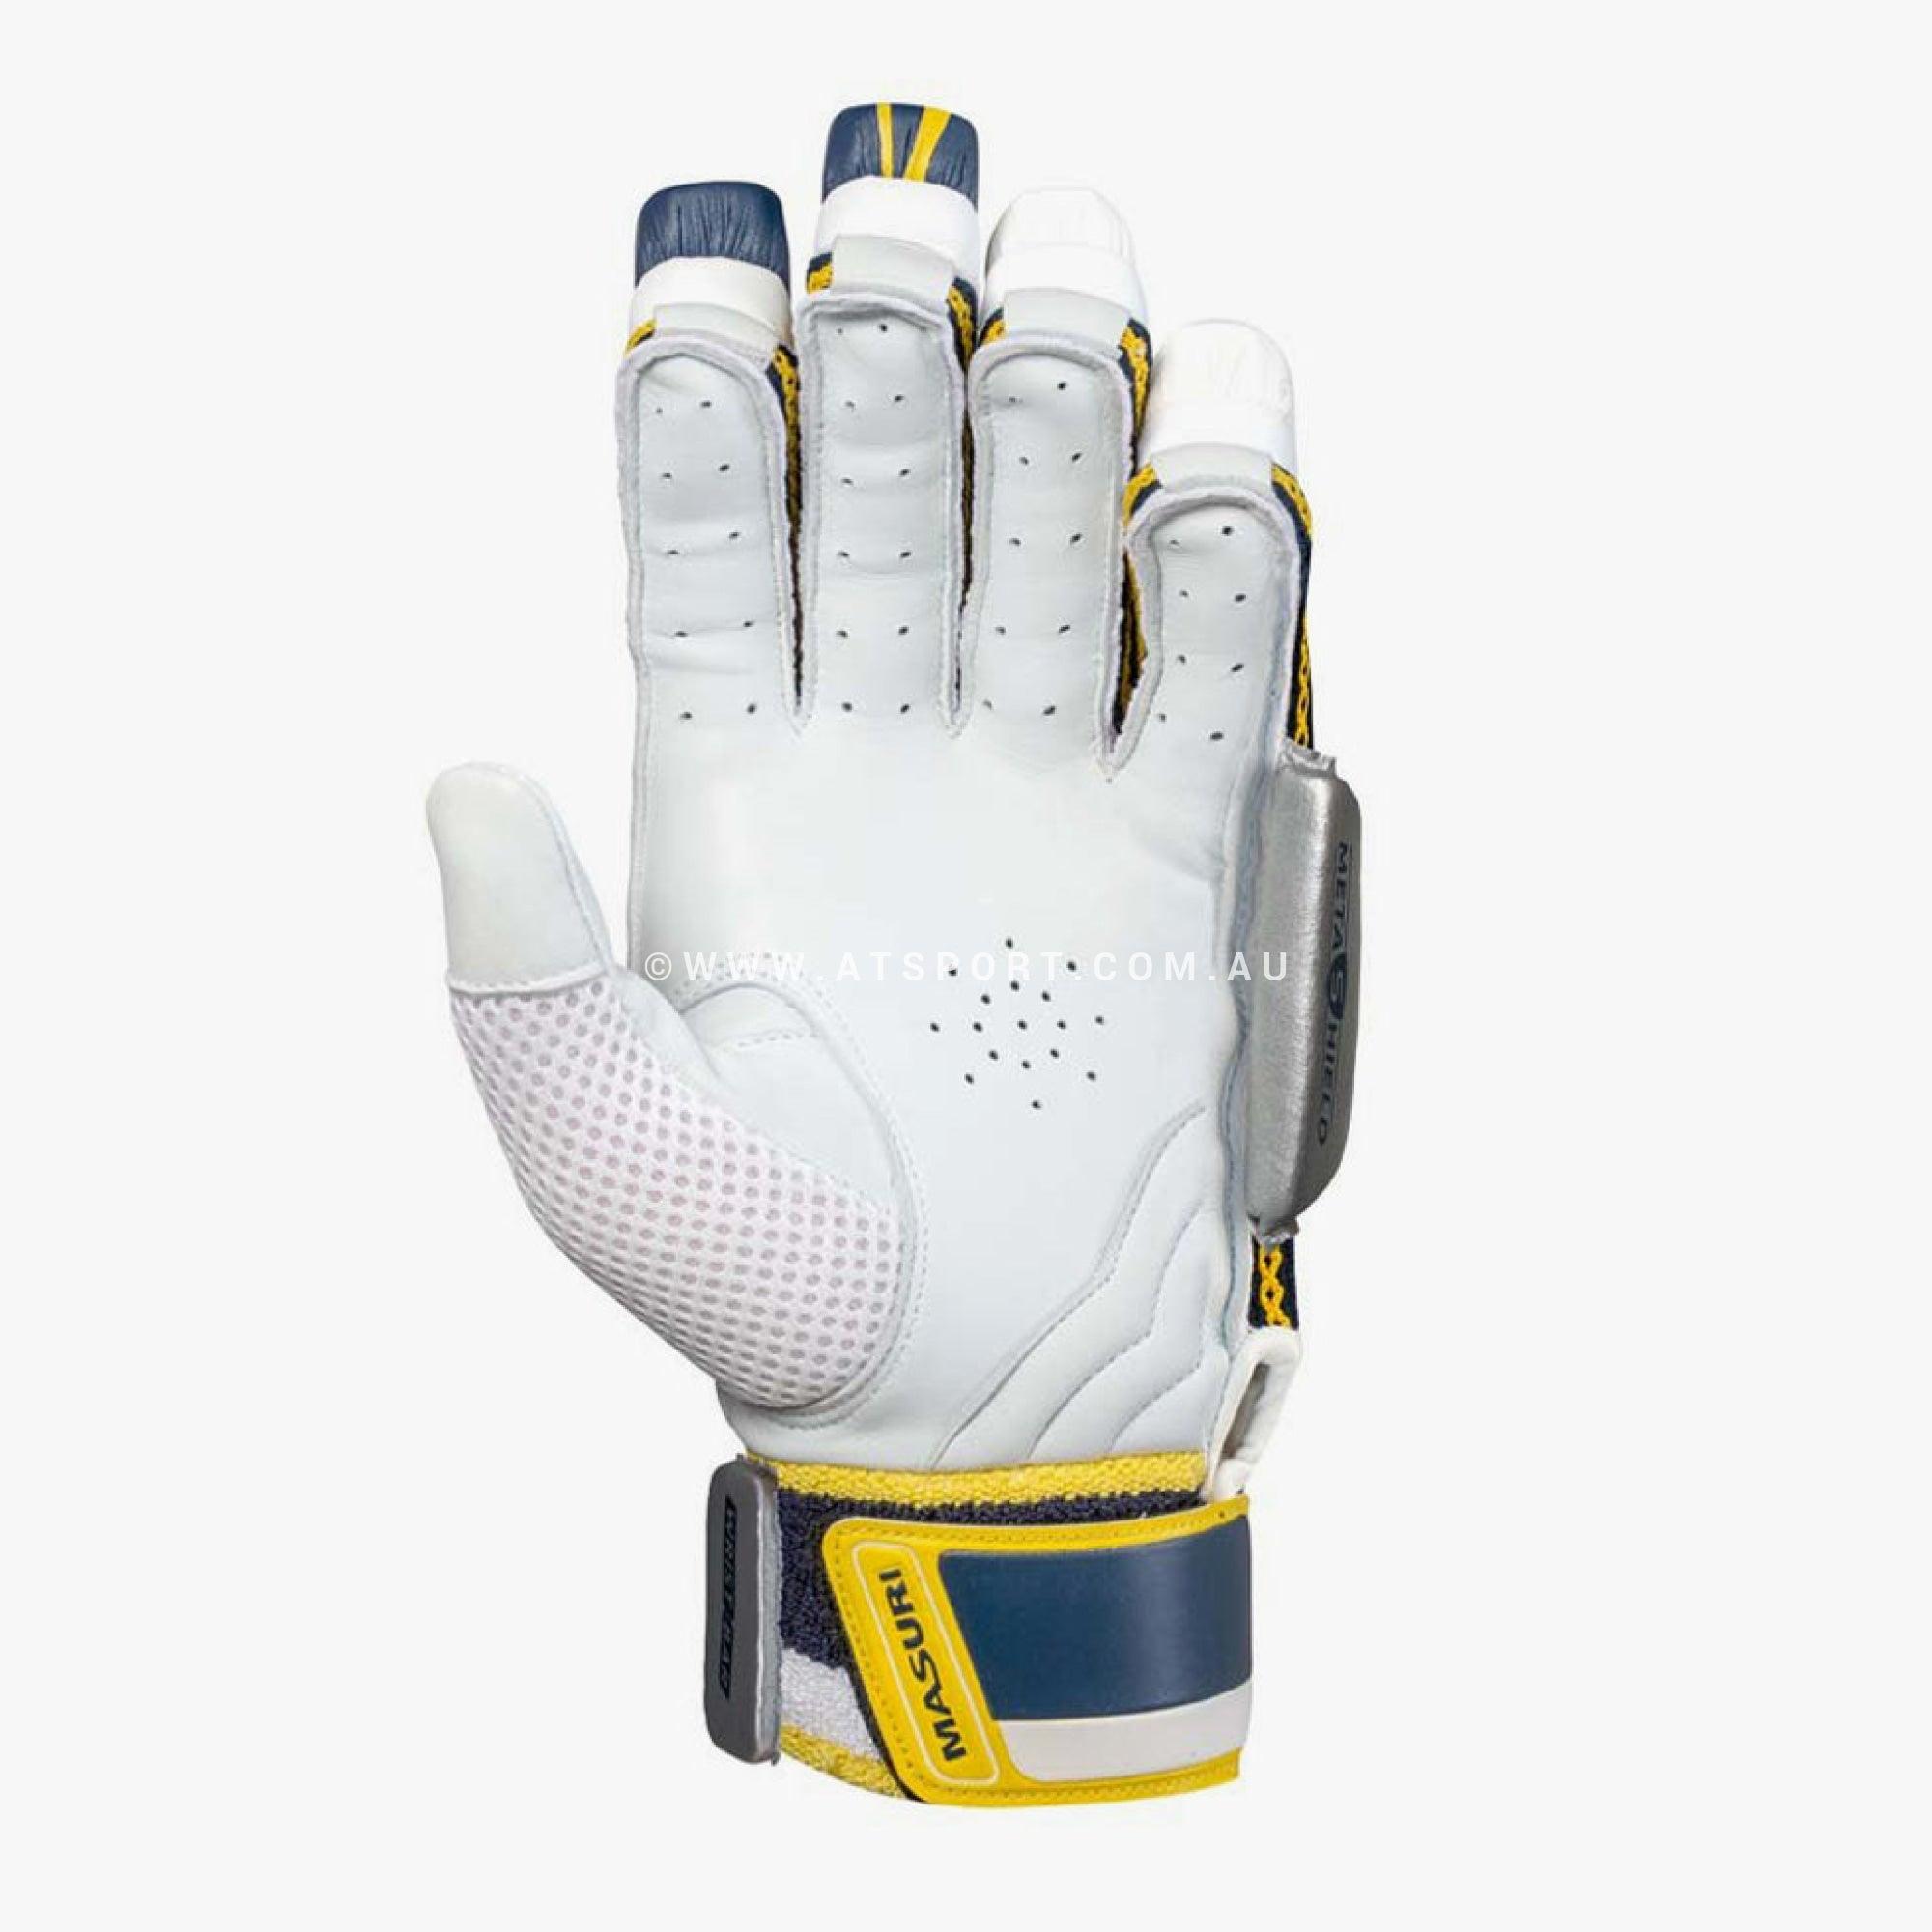 Masuri T LINE Cricket Batting Gloves - ADULT - AT Sports